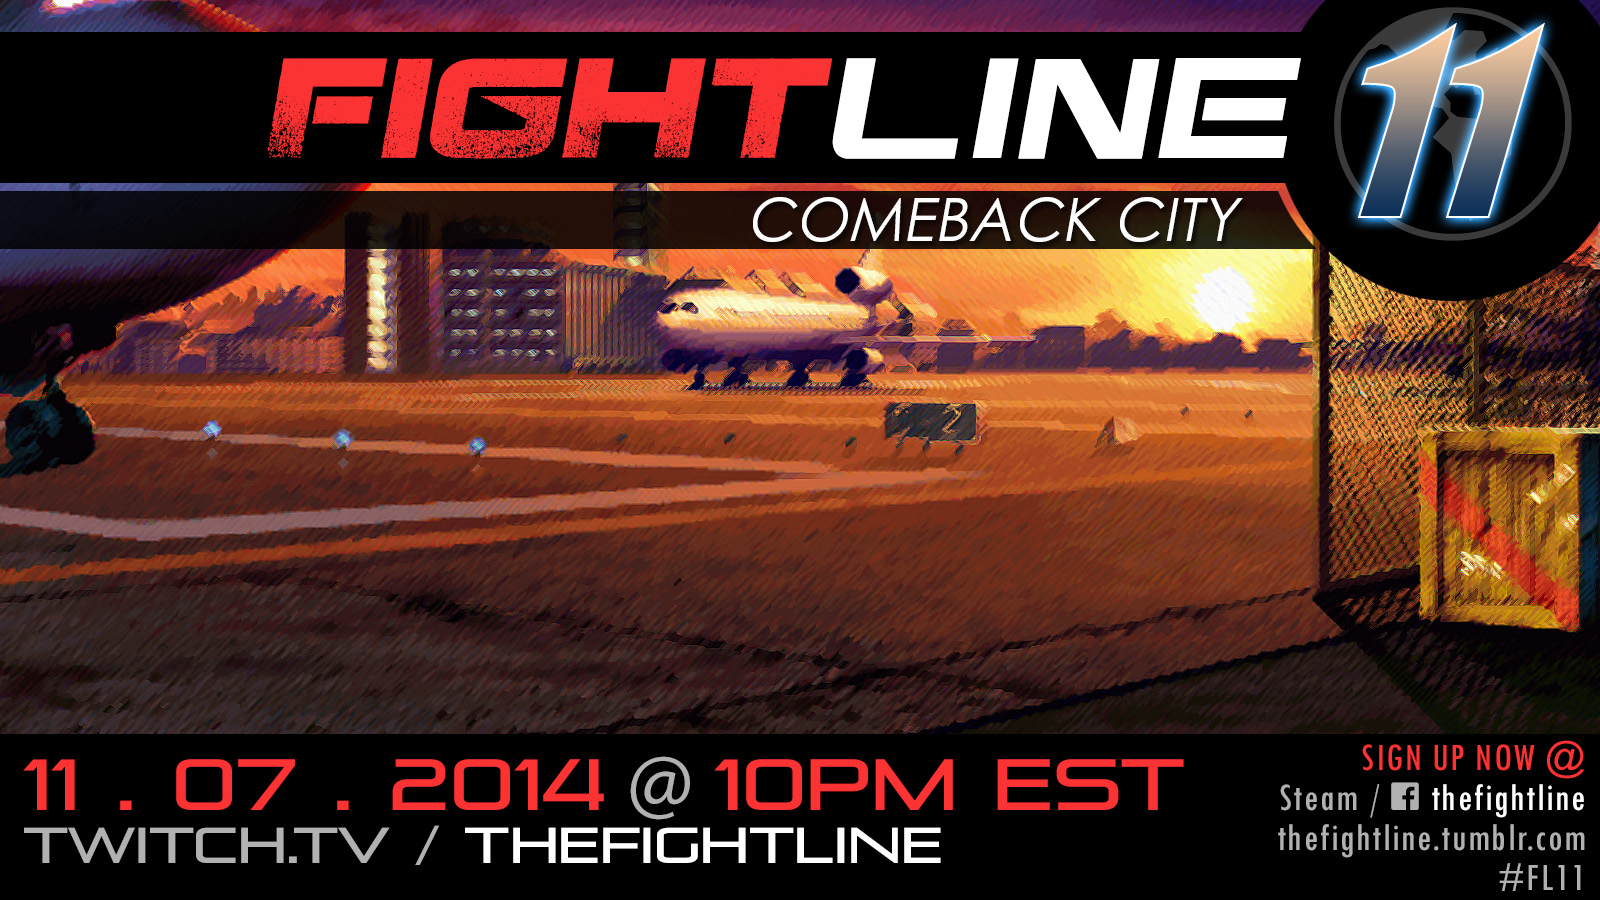 [IMAGE] Fightline 11 Promo